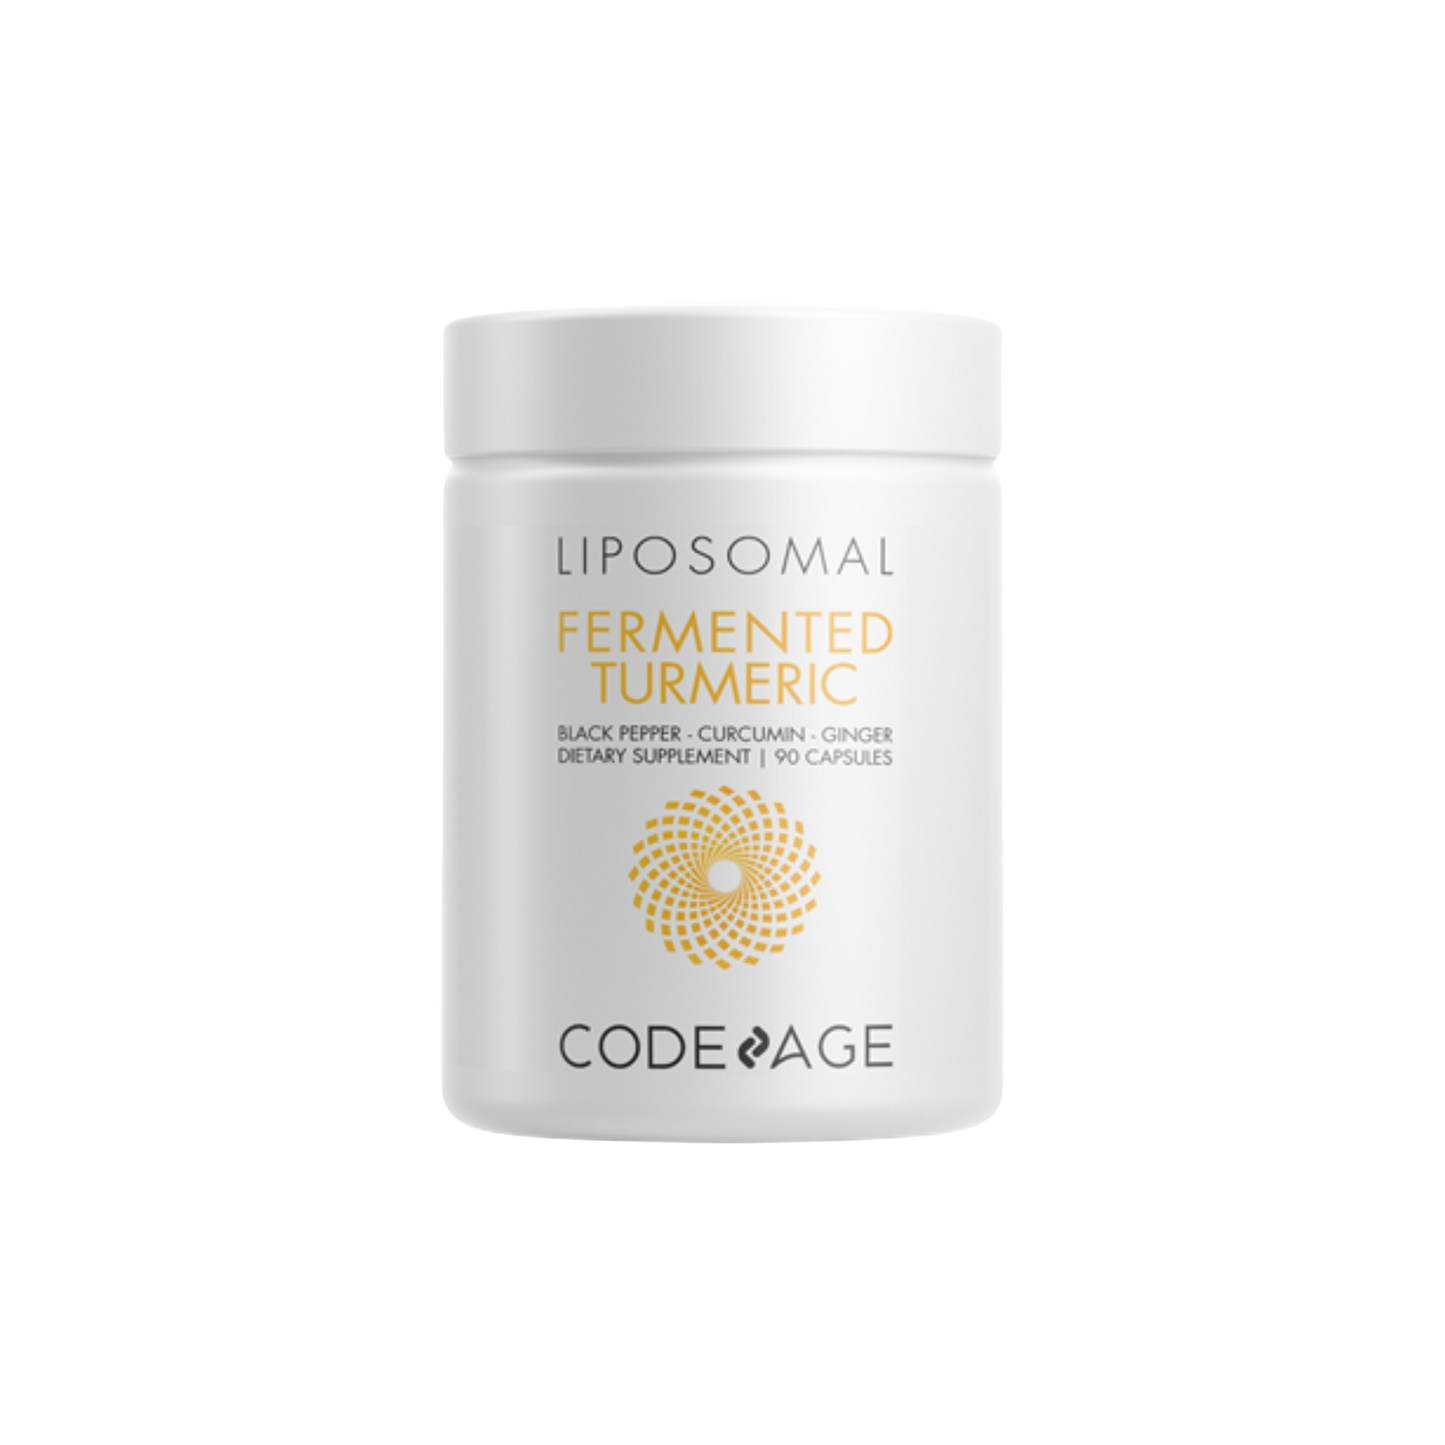 Codeage Liposomal Fermented Turmeric Capsules